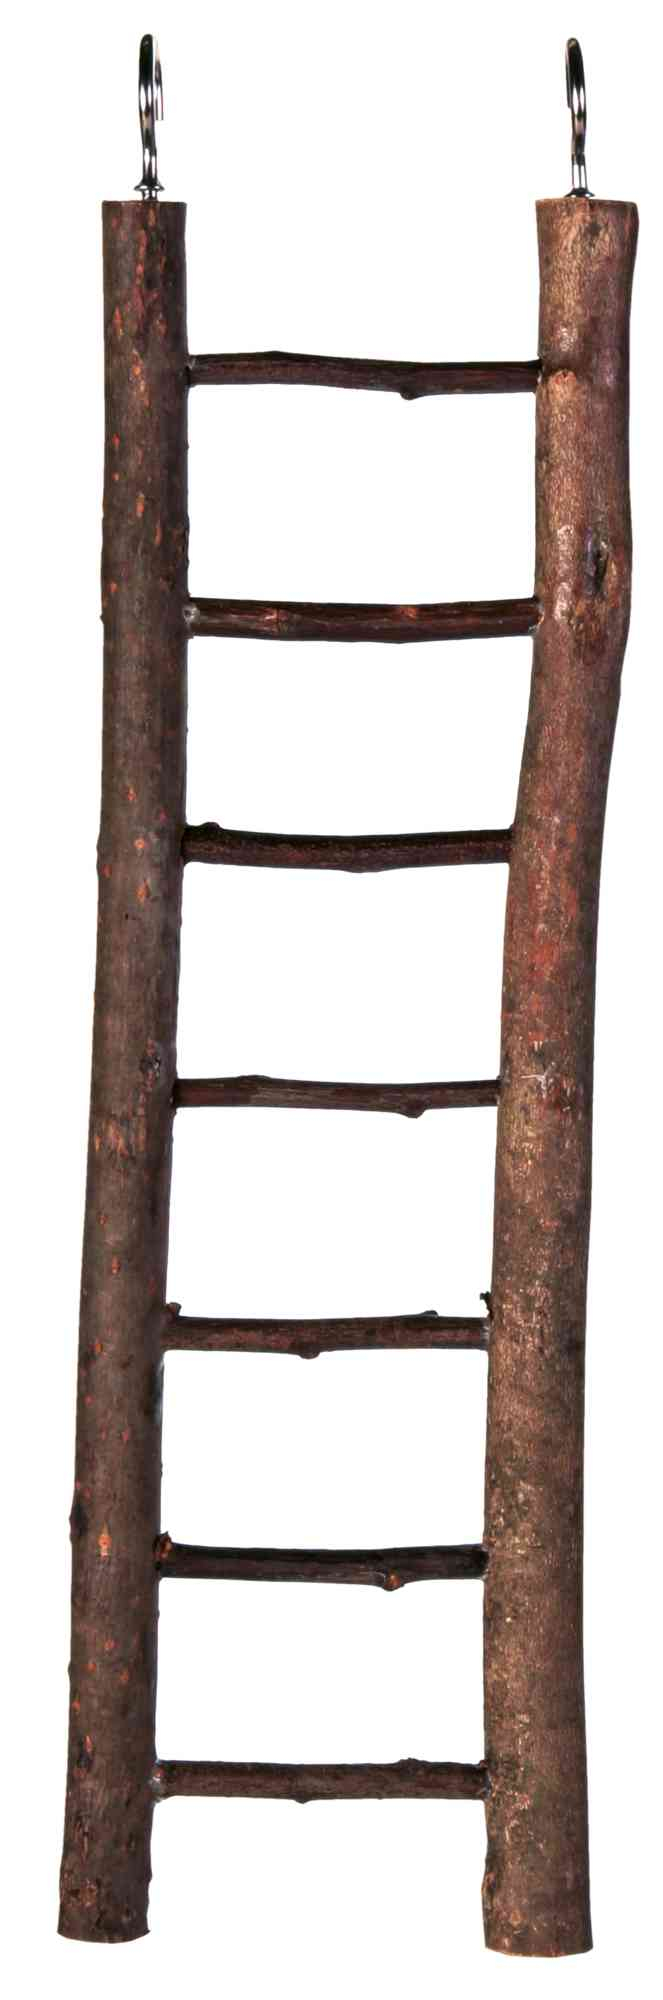 Natural Living houten ladder voor vogels